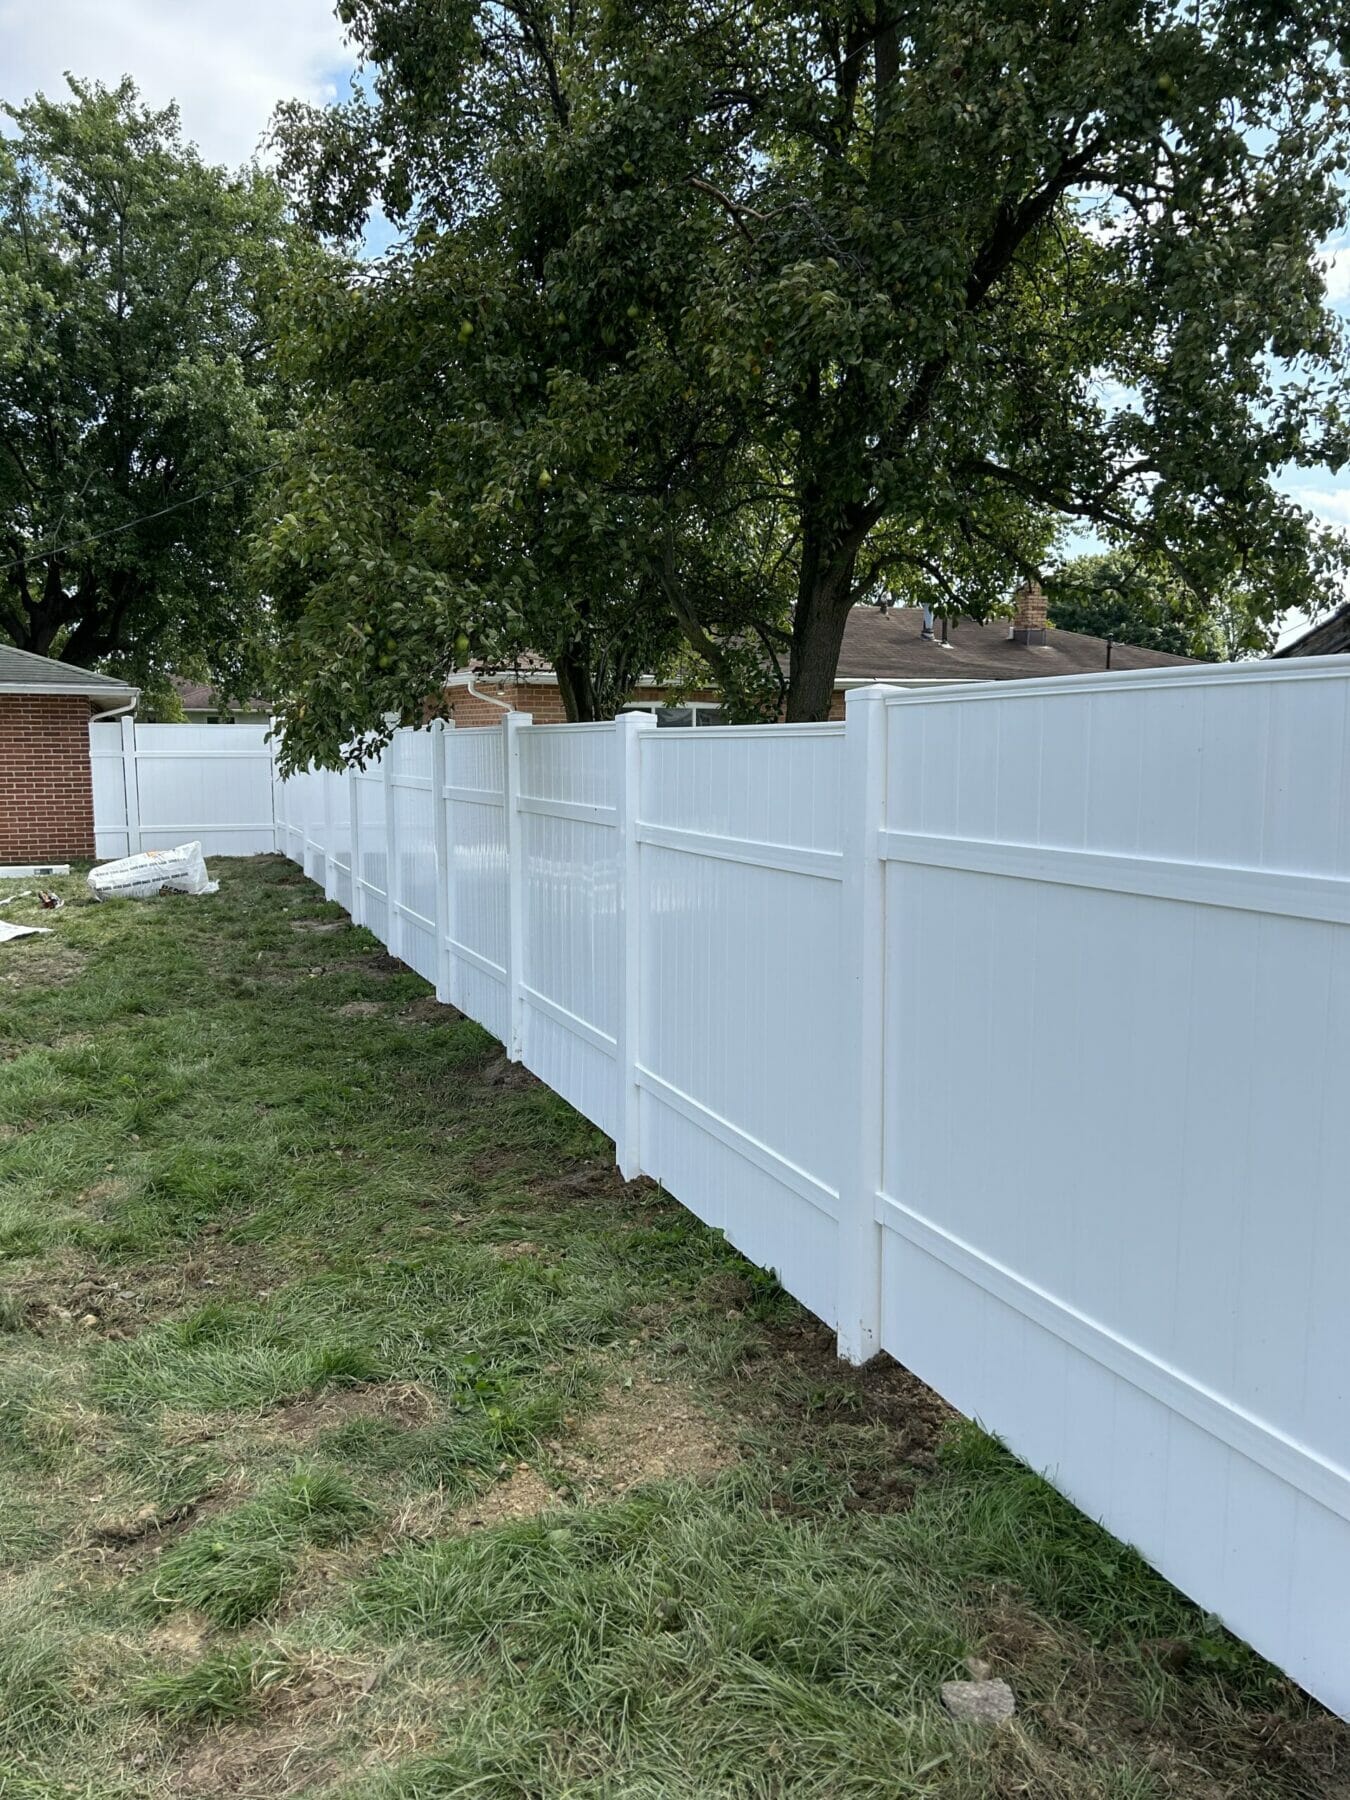 New White fence installed around yard